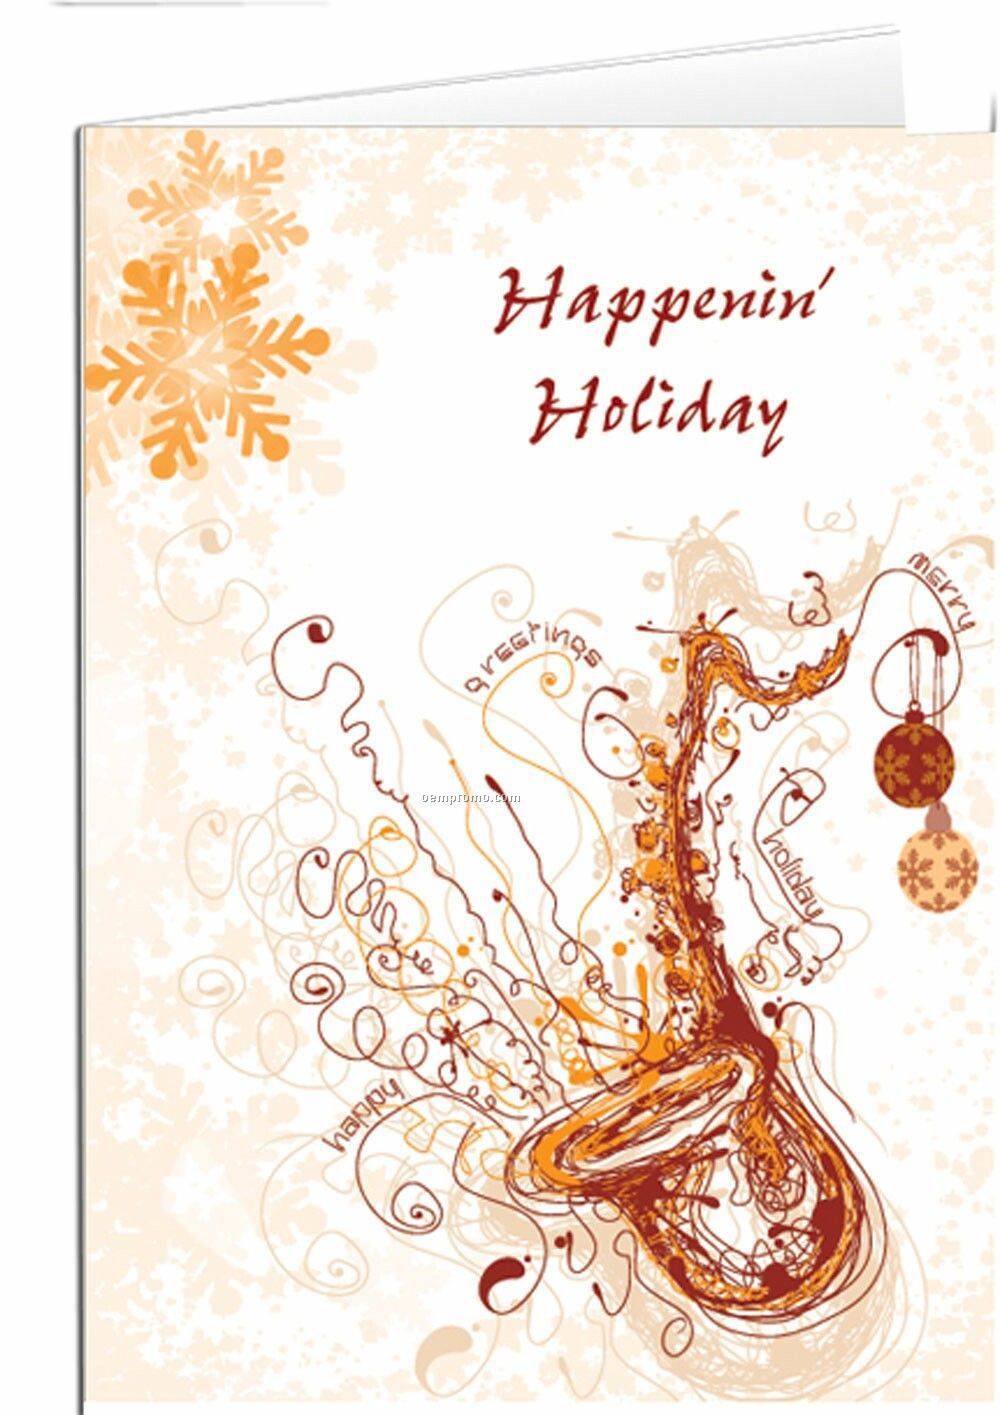 Happenin' Sax Holiday Greeting Card